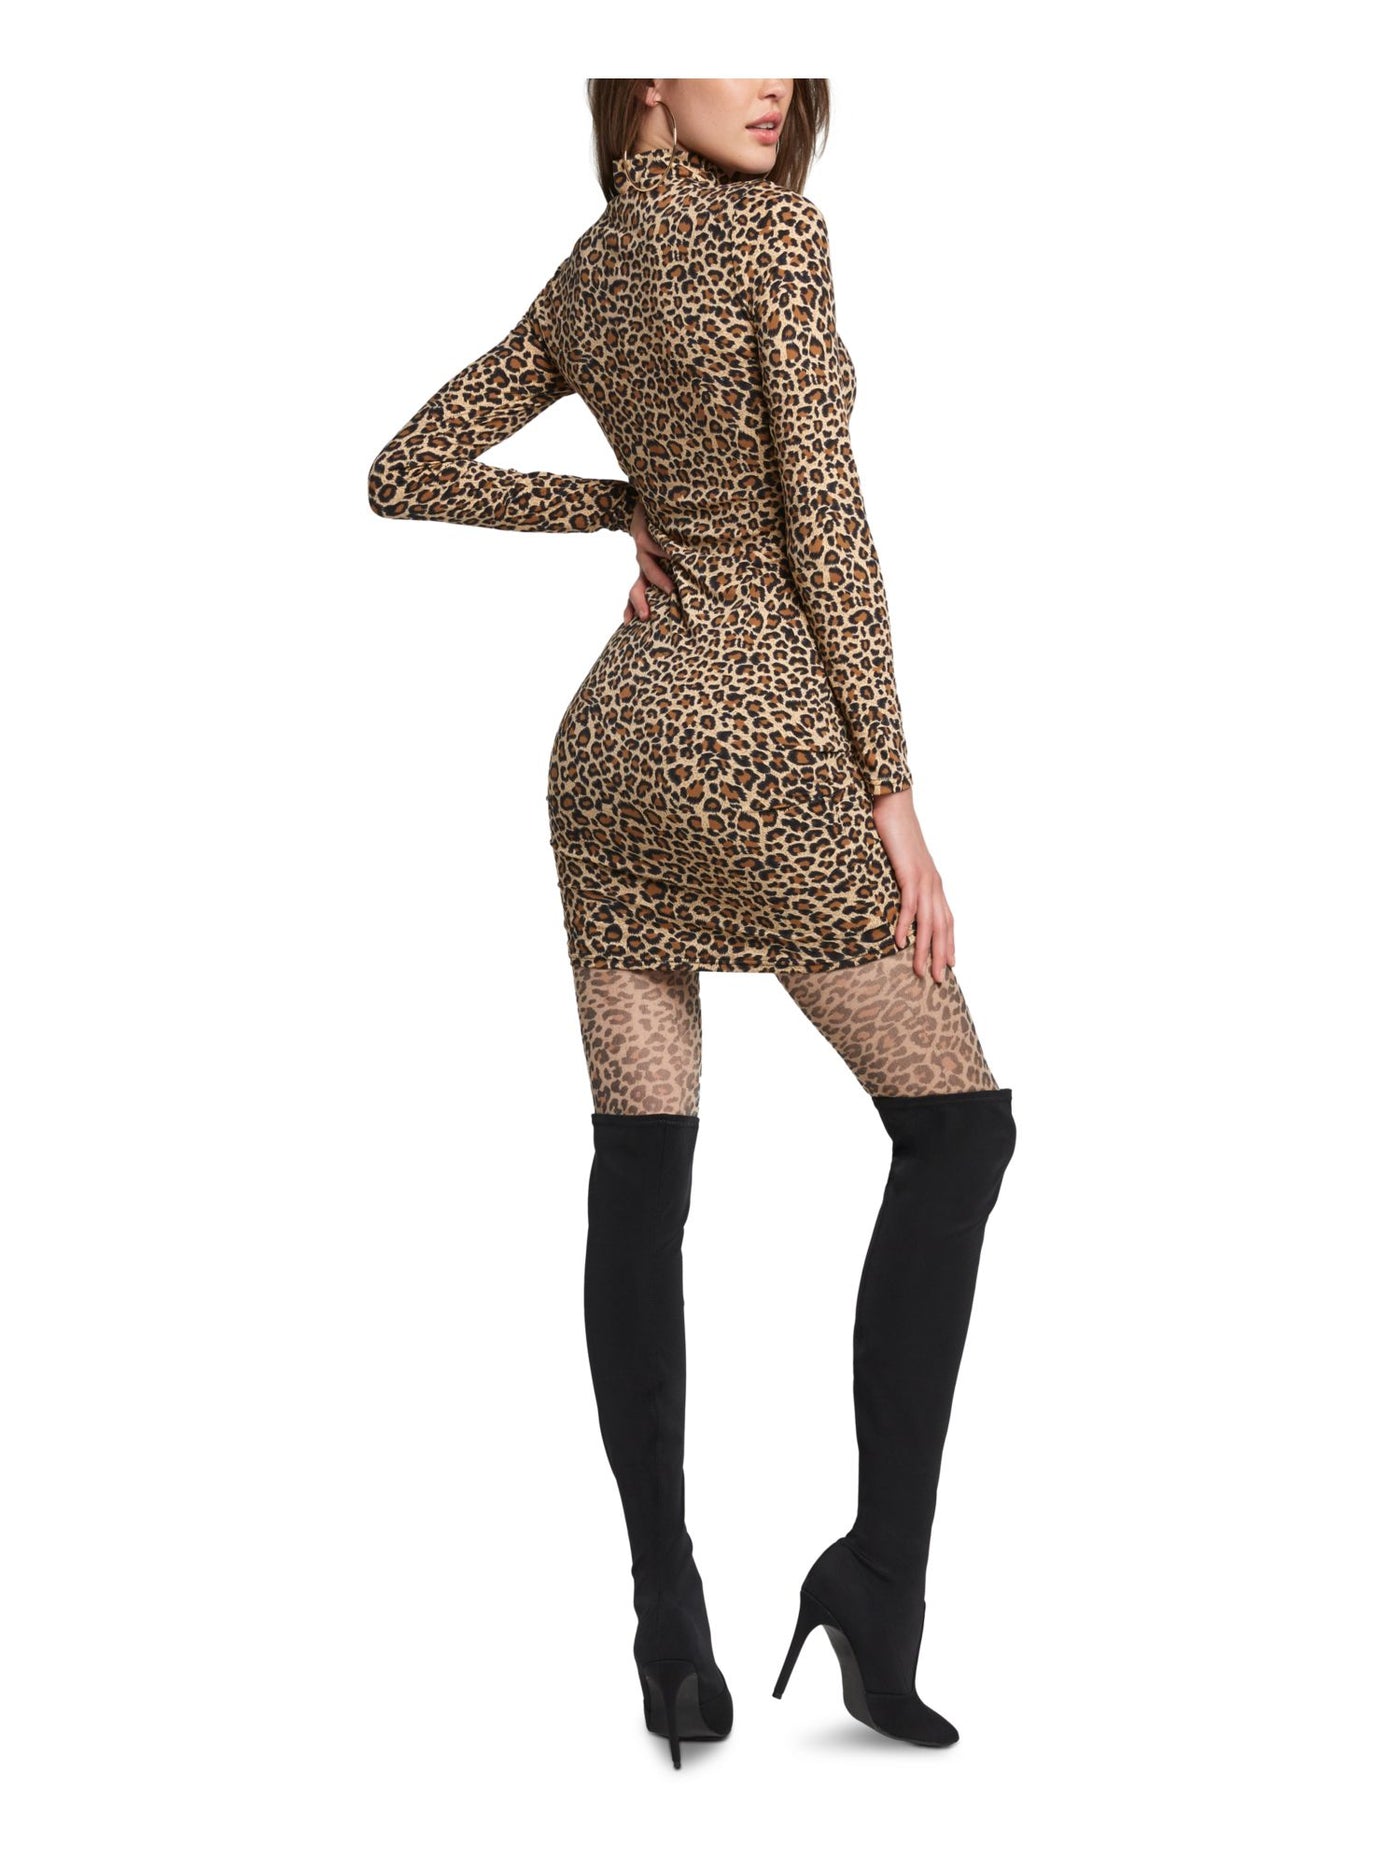 BARDOT Womens Beige Animal Print Long Sleeve Mock Short Party Body Con Dress XS